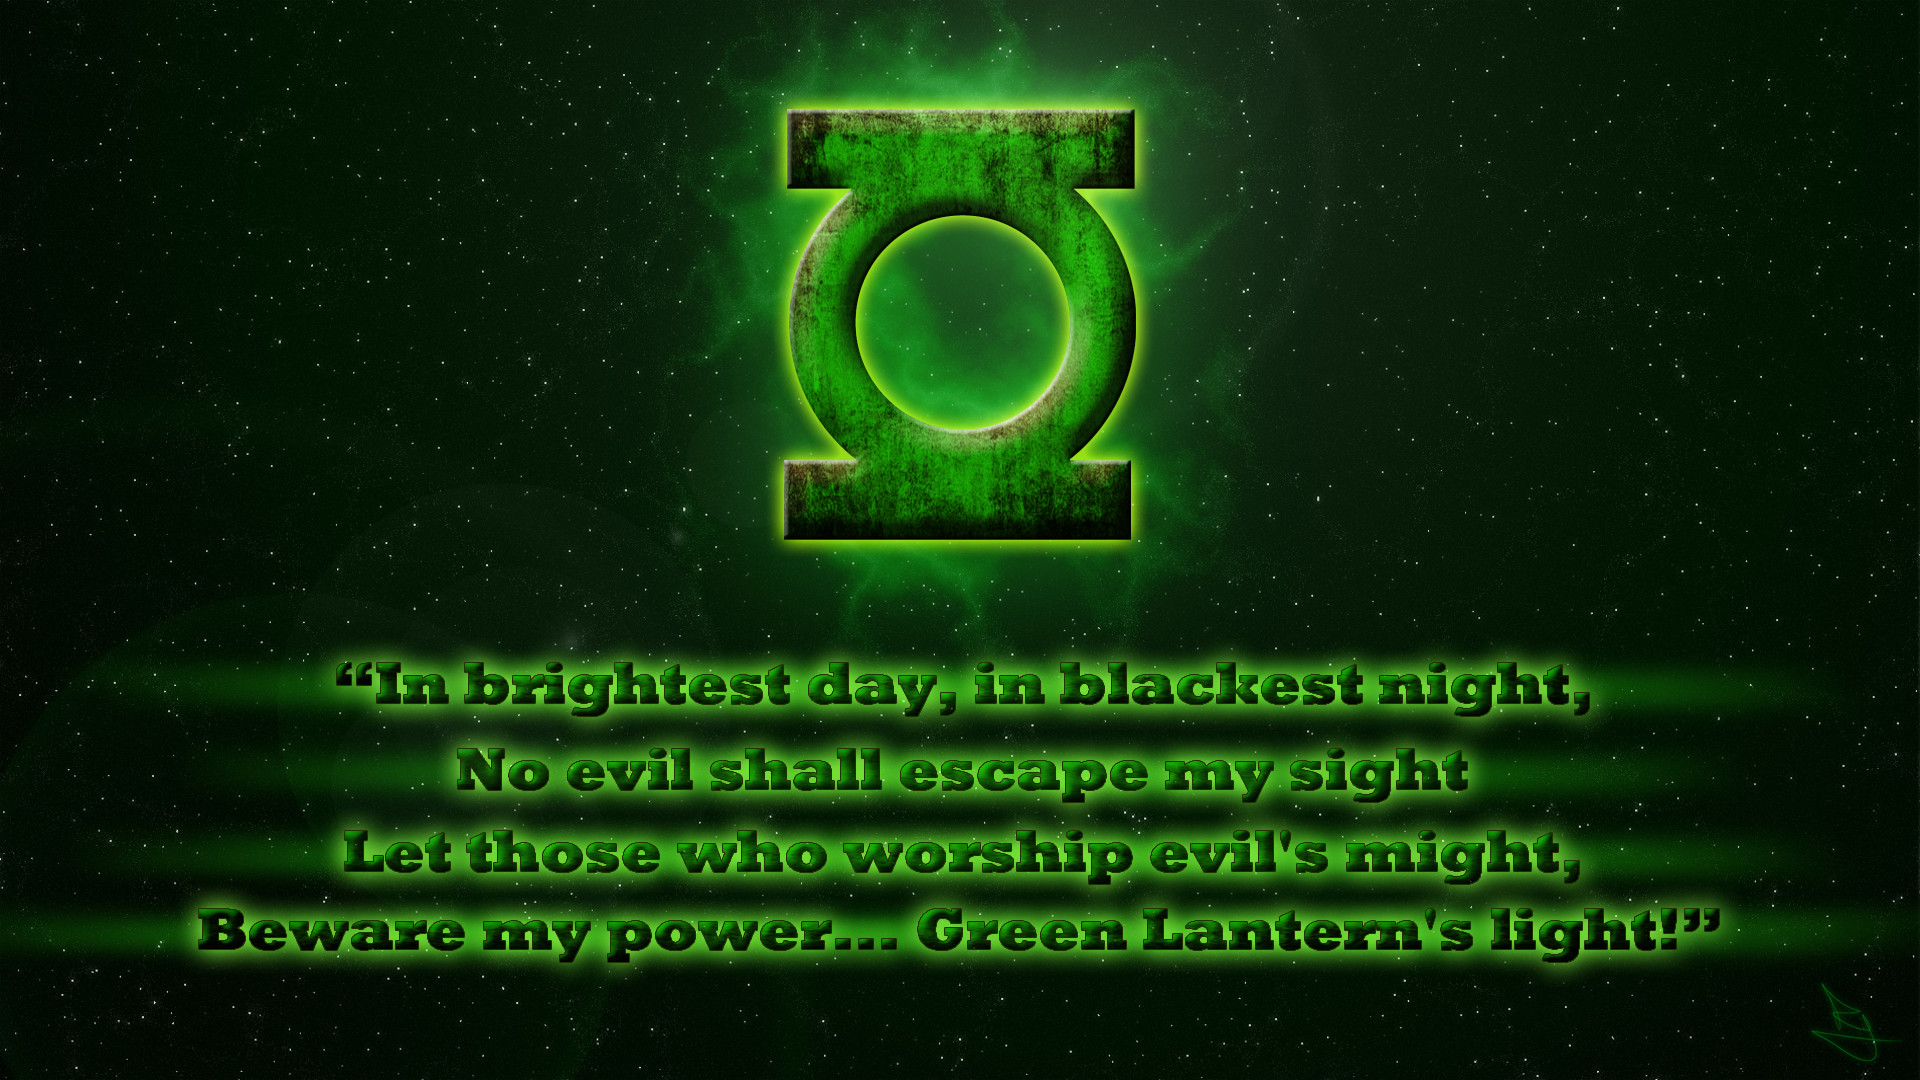 1920x1080 Green lantern oath - photo#1